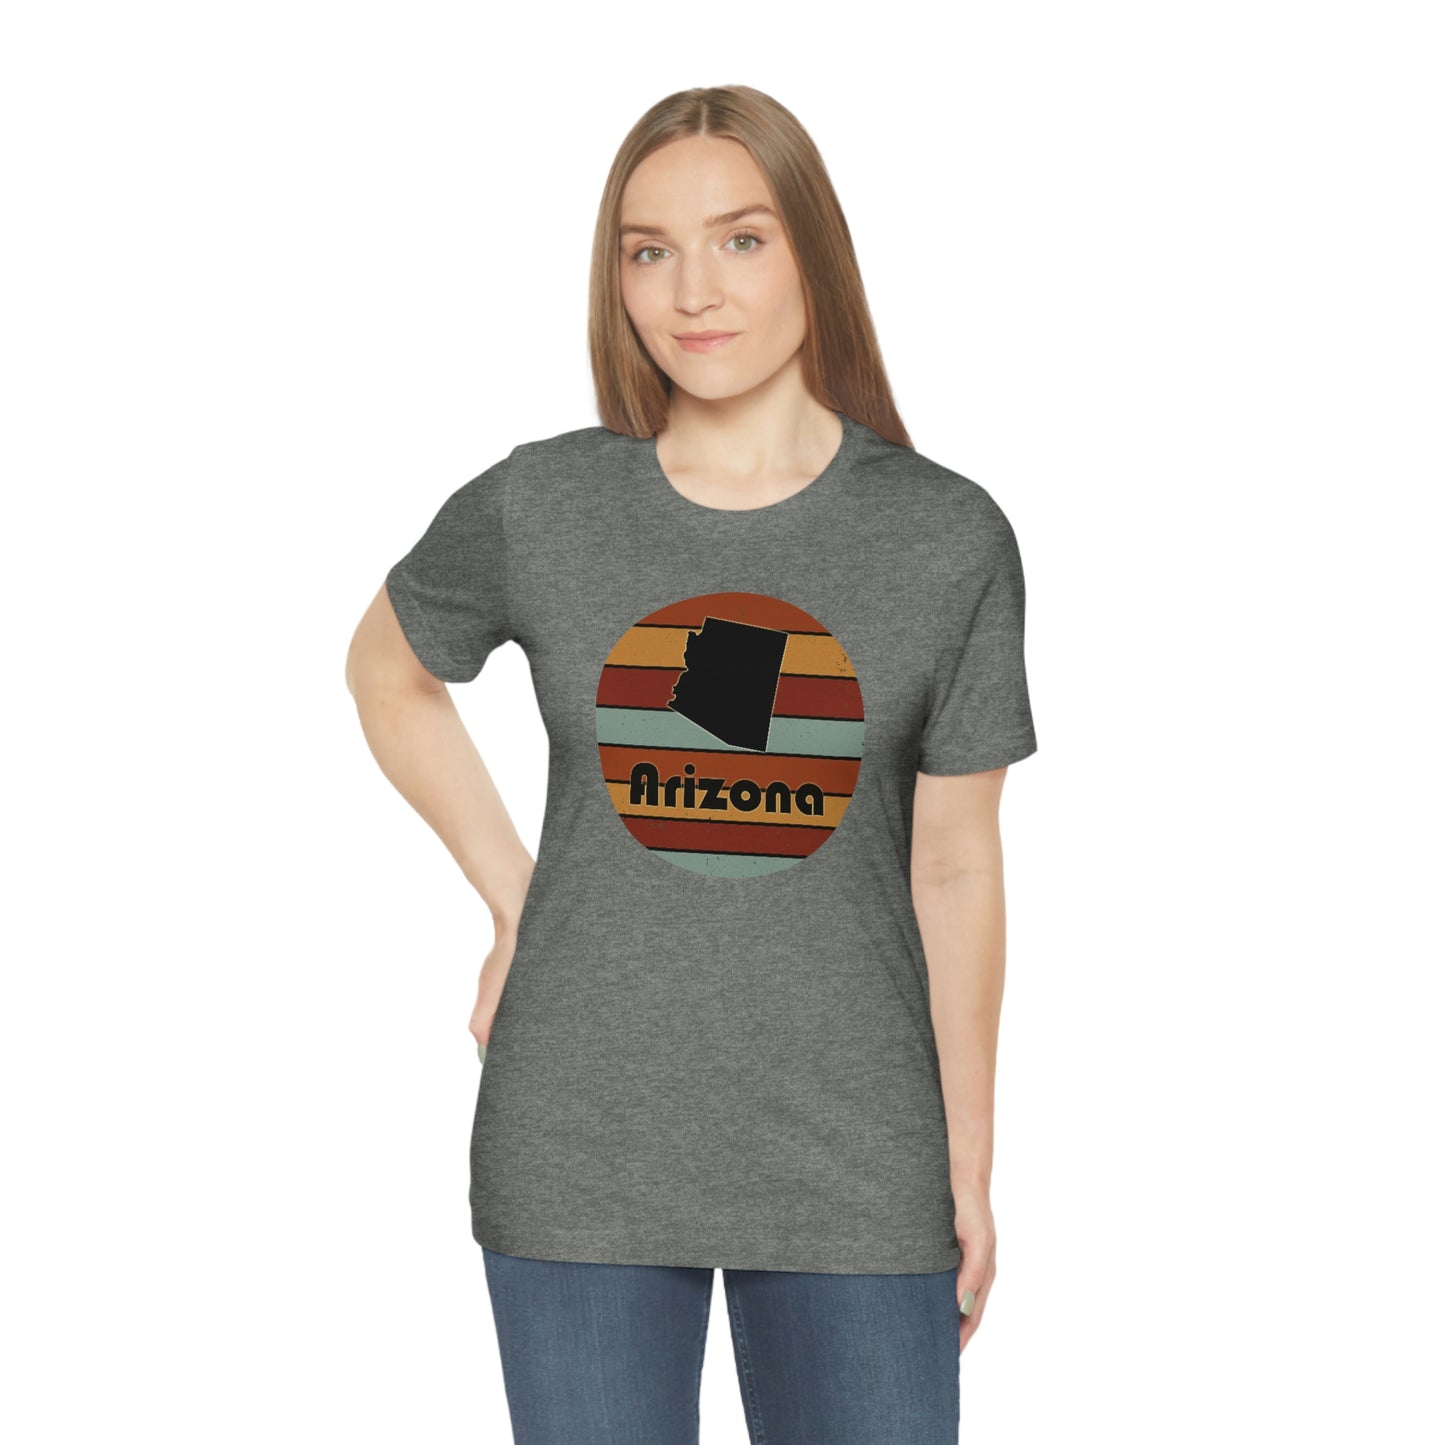 Arizona Retro Sunset Unisex Jersey Short Sleeve Tee Tshirt T-shirt